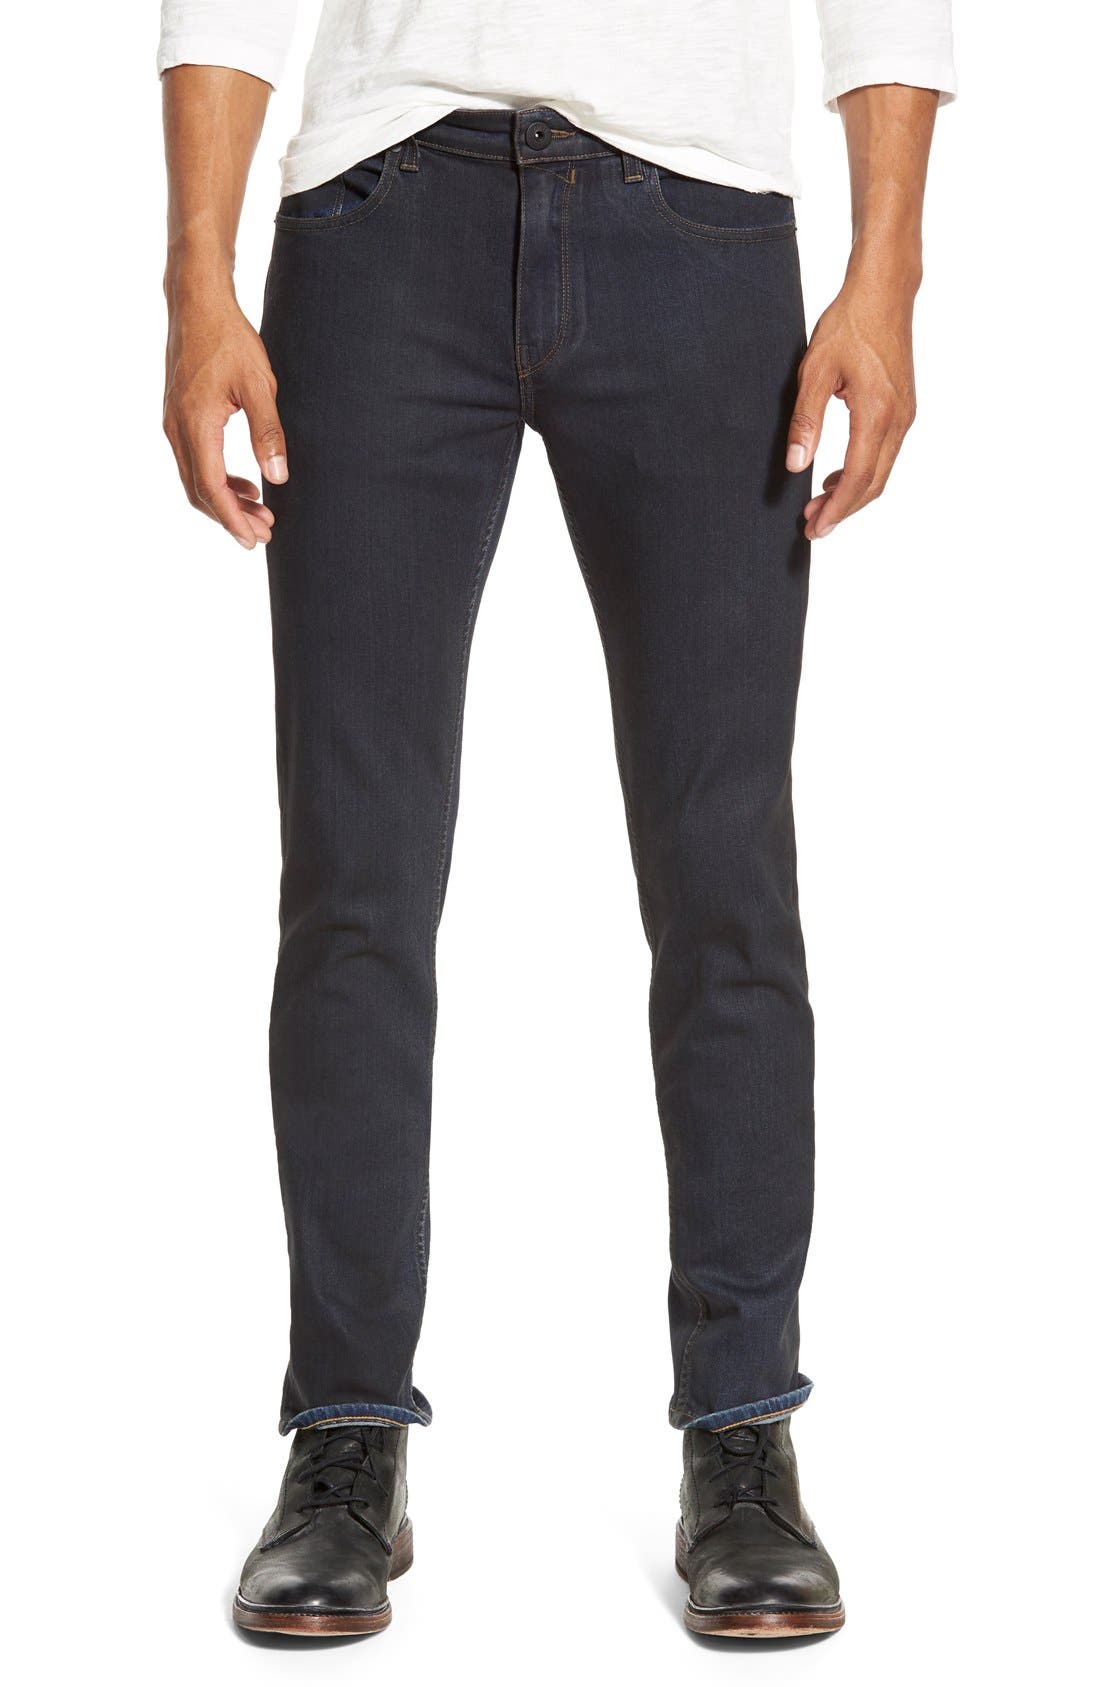 paige lennox jeans nordstrom rack